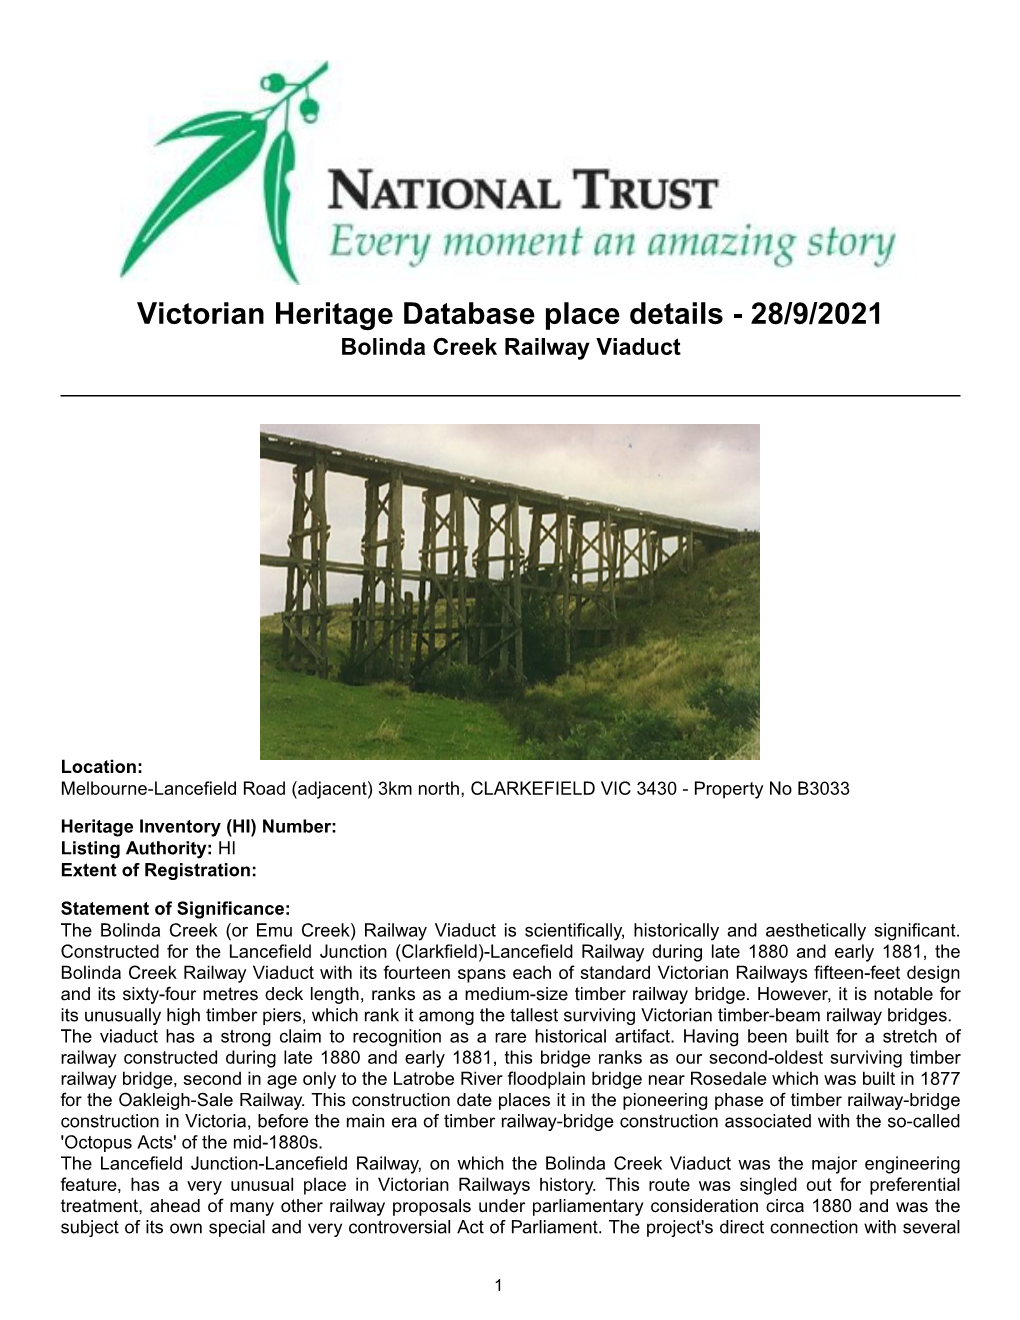 Victorian Heritage Database Place Details - 28/9/2021 Bolinda Creek Railway Viaduct